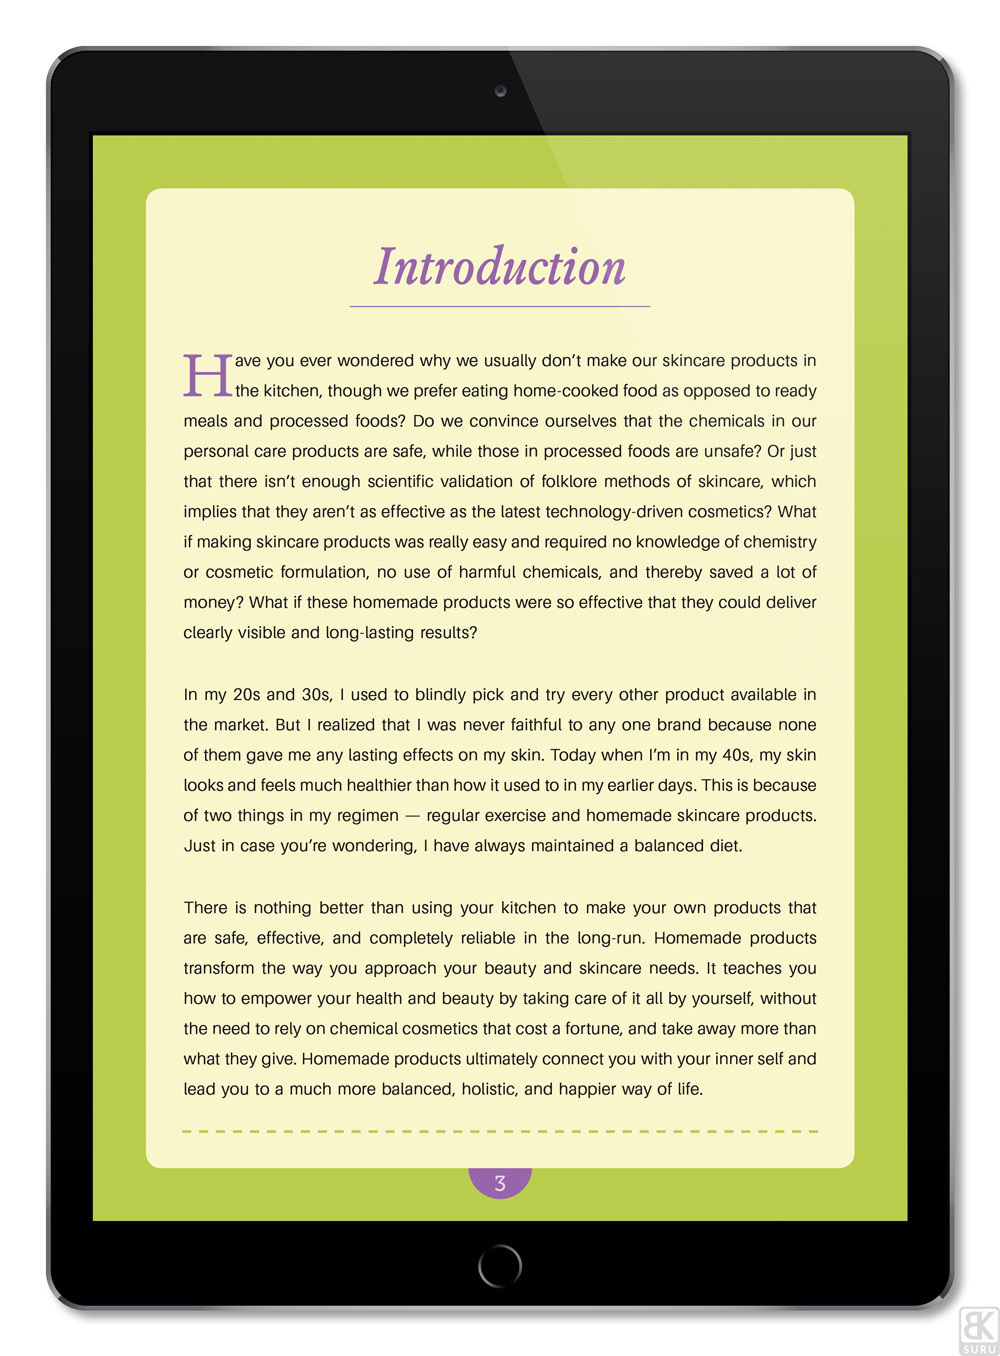 ebook cover design eBook design editorial design  formatting & layout illustration design Image Editing Image sourcing proofreading publication design typography  